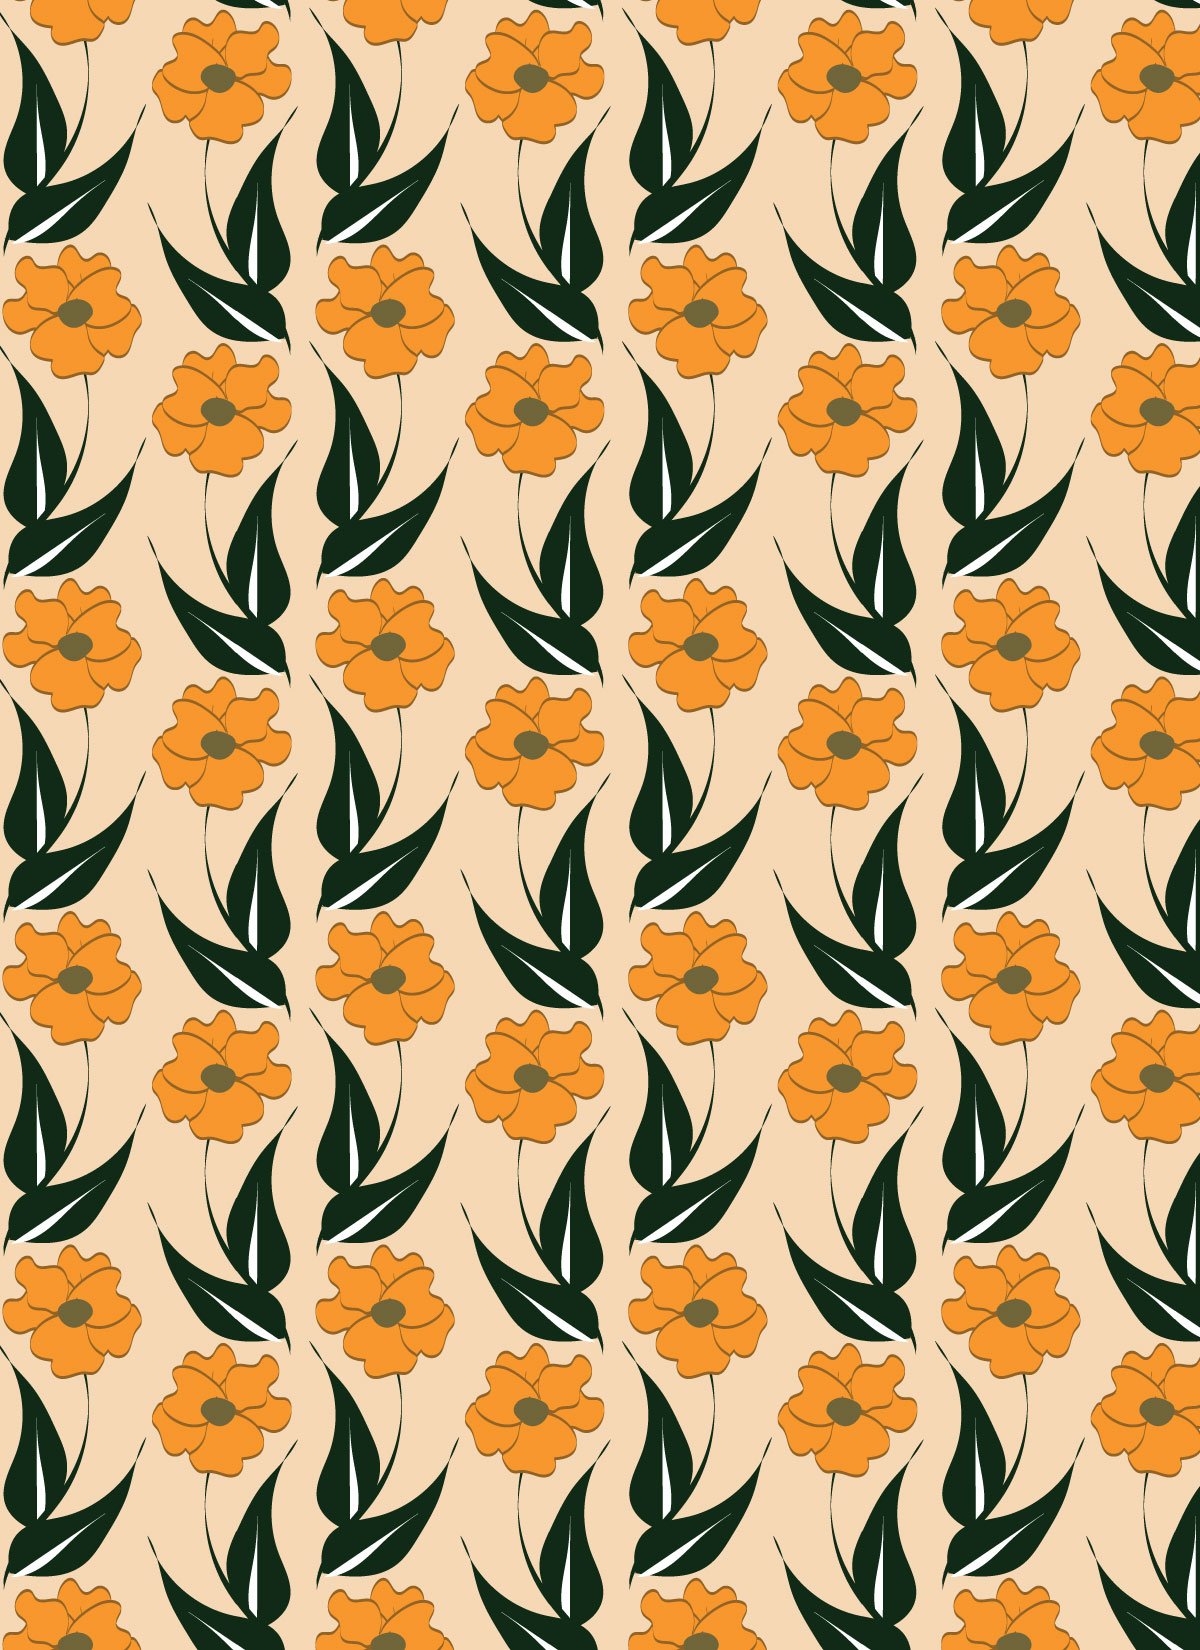 Flowers-Marigold Print.jpg